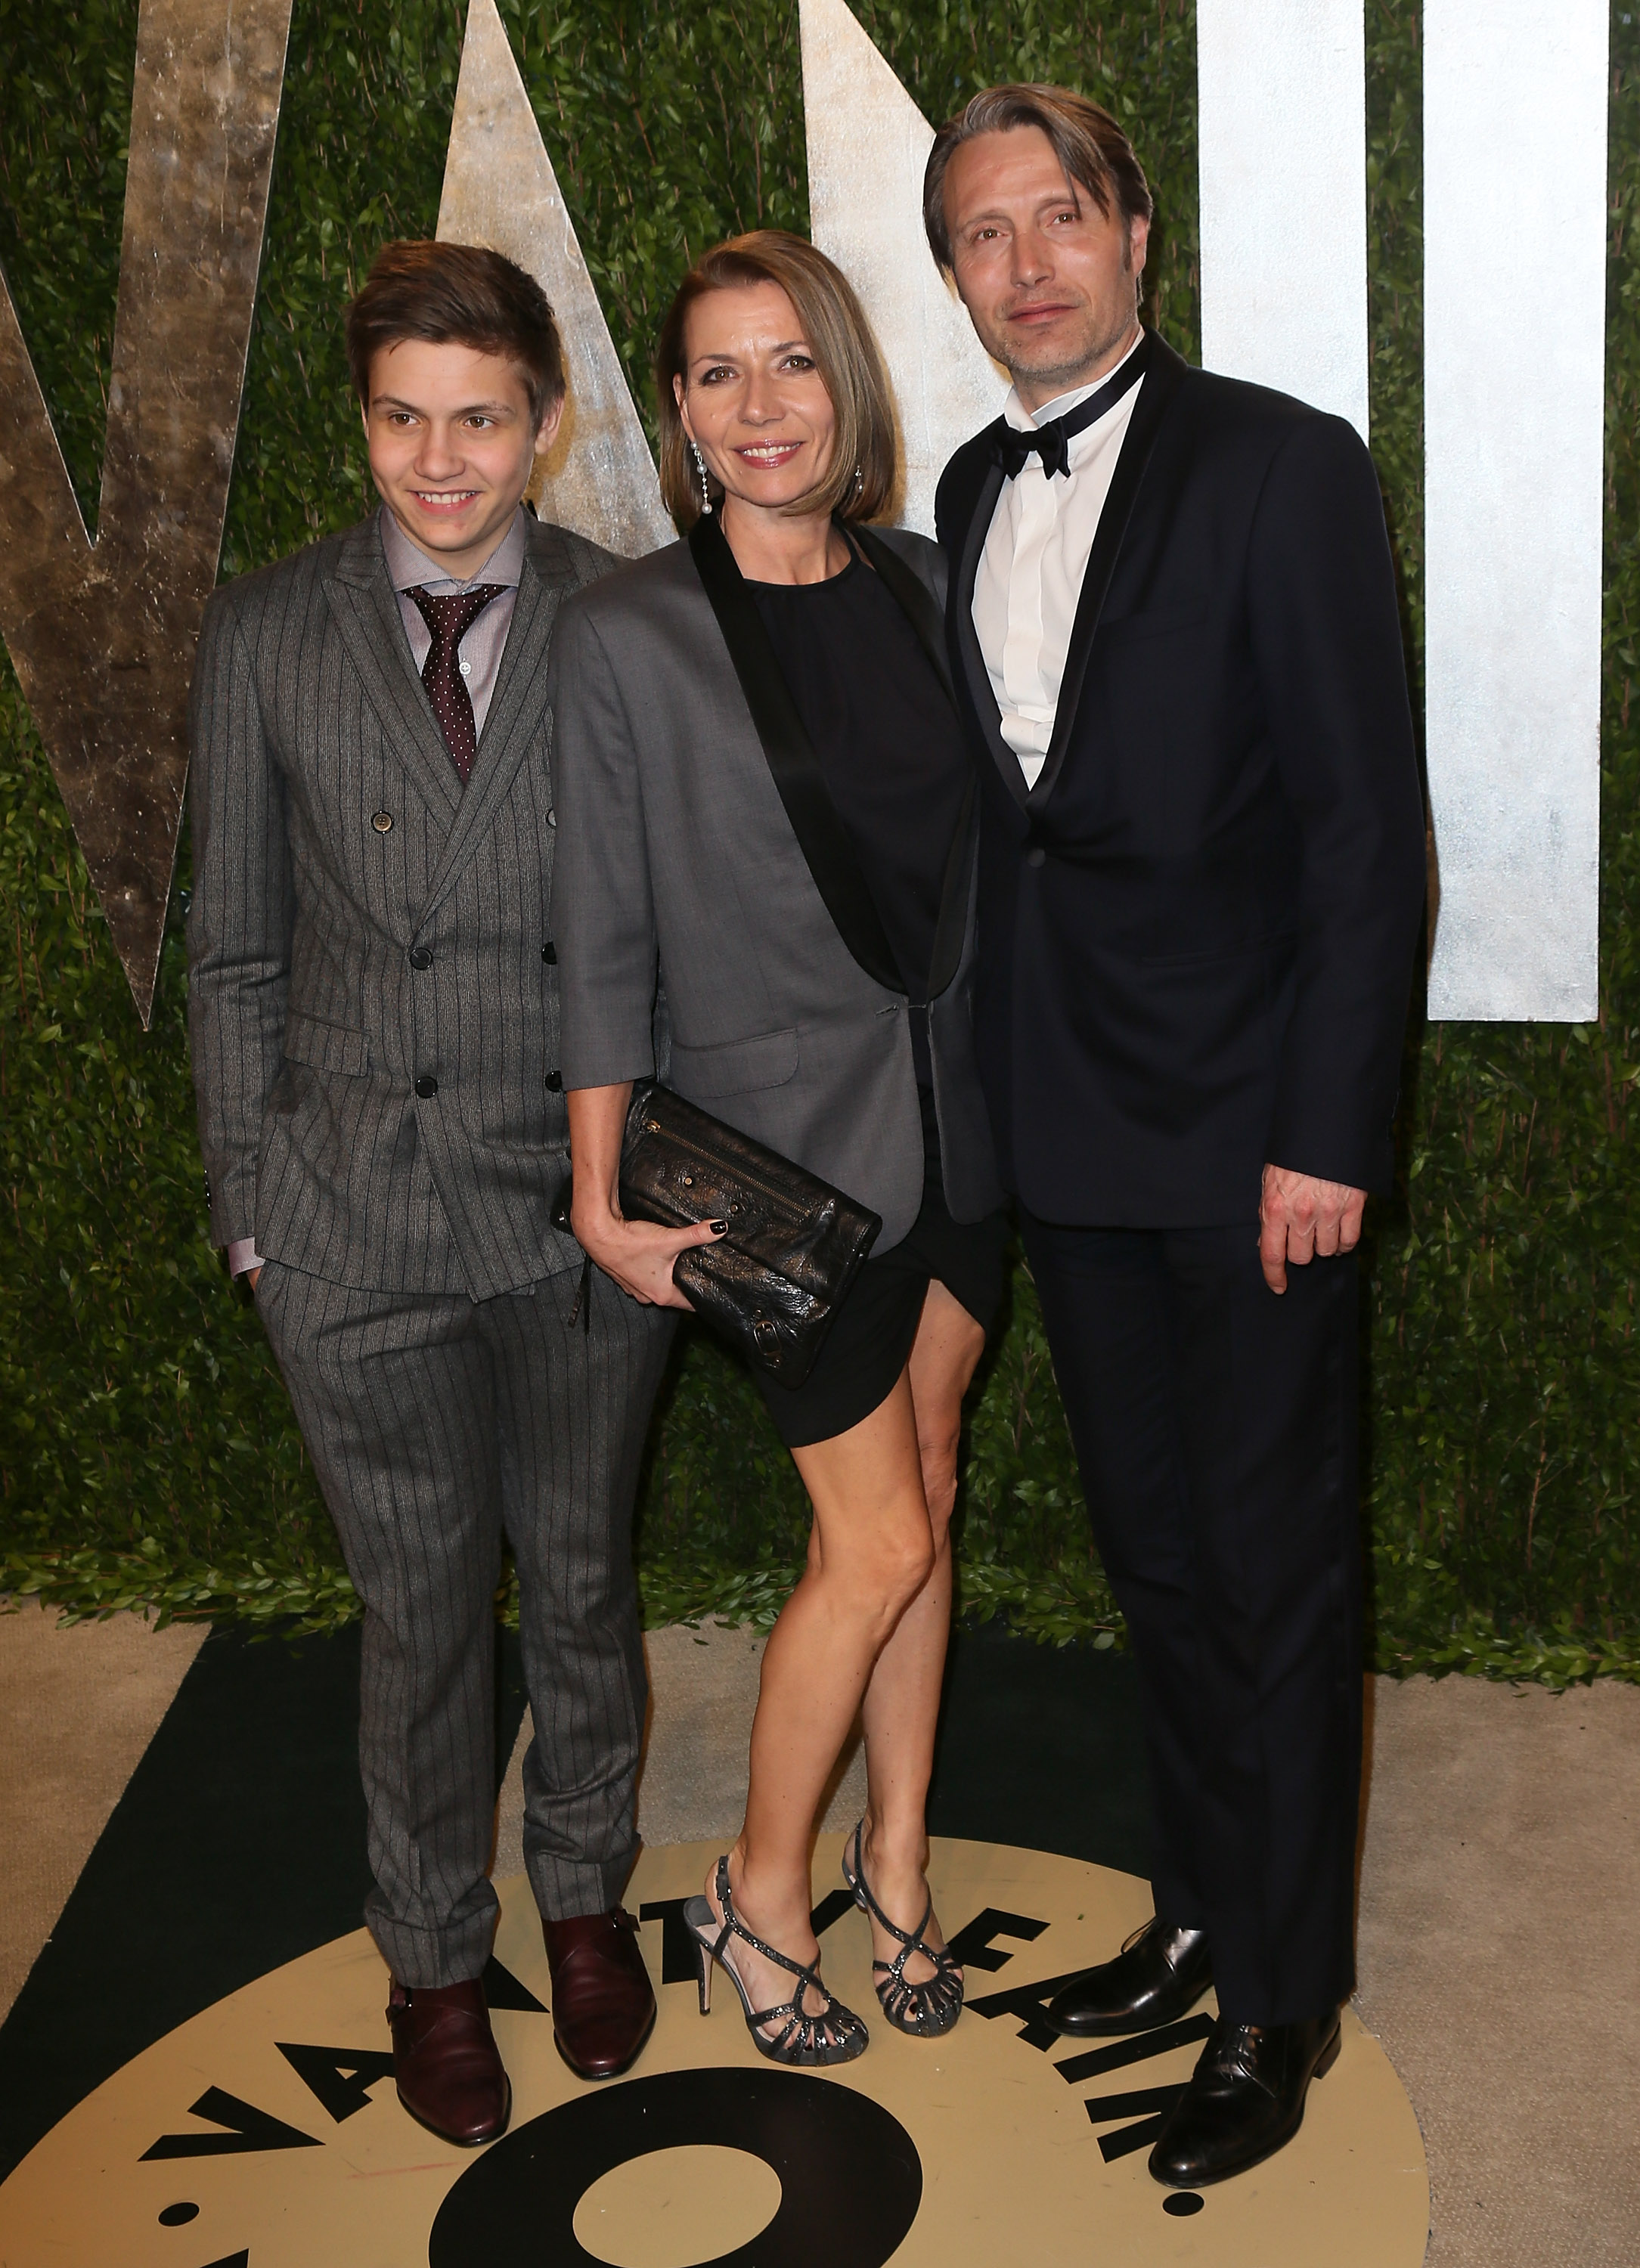 Mads Mikkelsen, Carl Mikkelsen y Hanne Jacobsen en la fiesta de los Oscar de Vanity Fair, el 24 de febrero de 2013, en California. | Foto: Getty Images